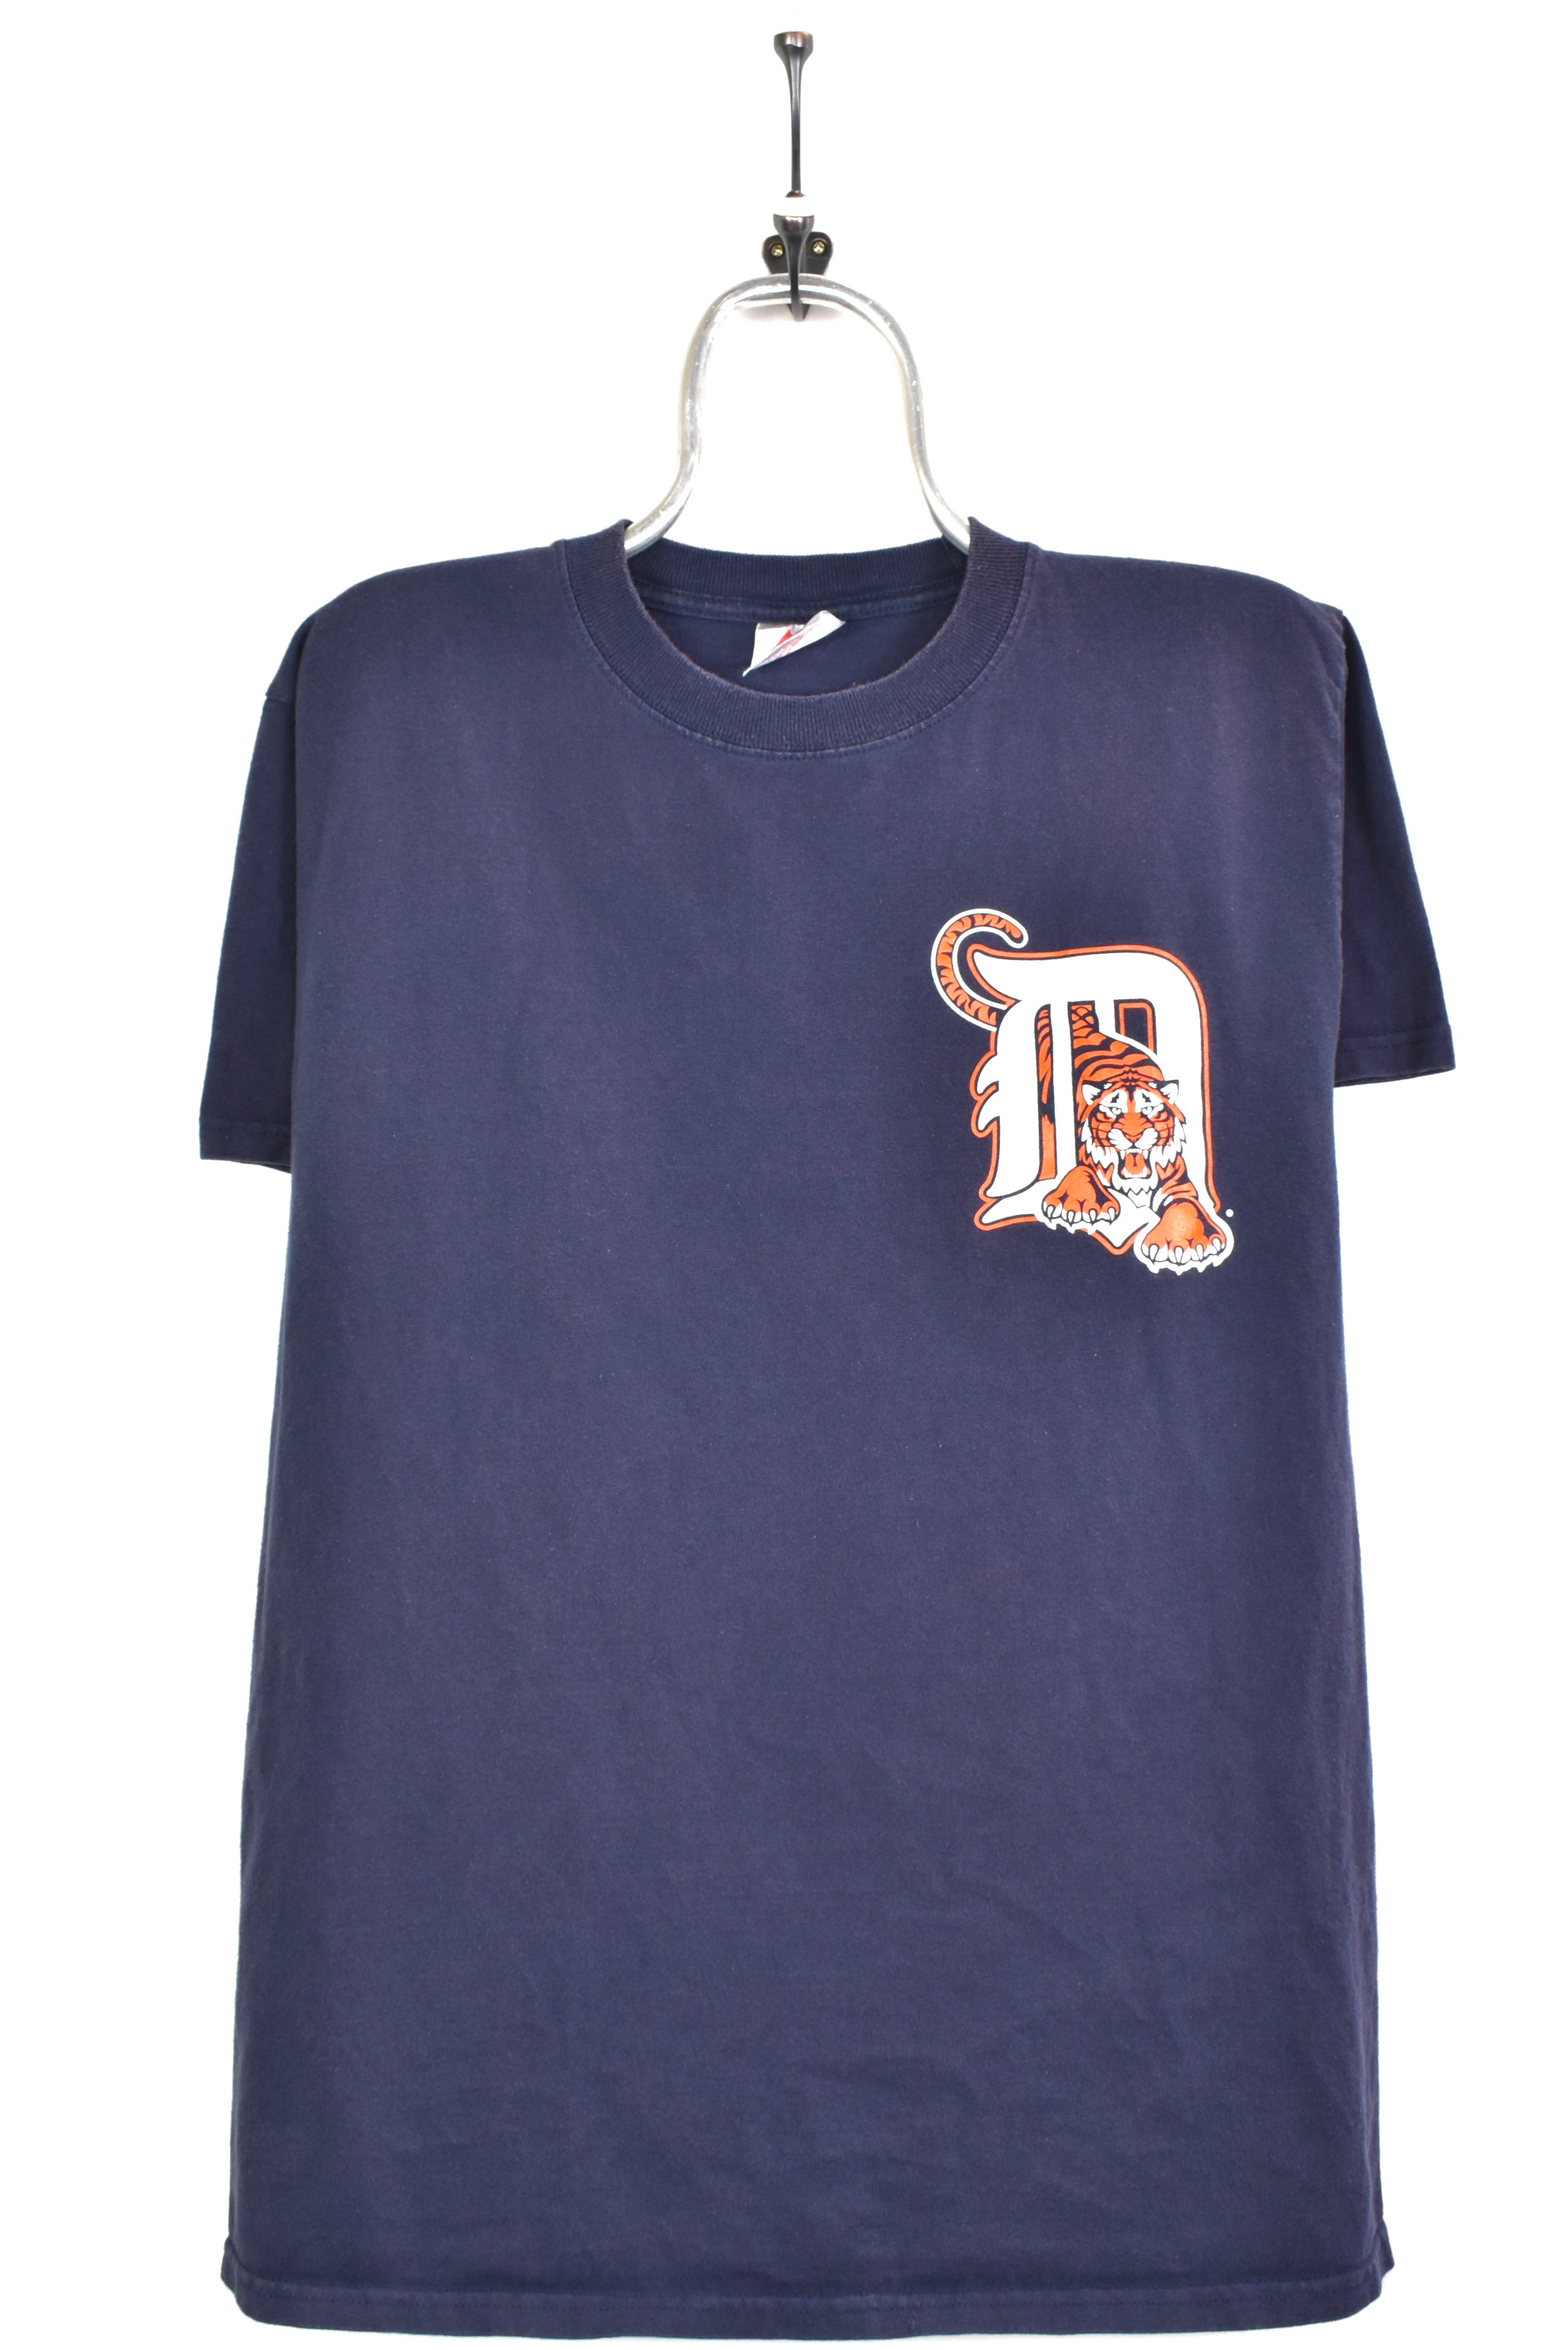 Vintage Detroit Tigers shirt, MLB short sleeve graphic tee - medium, navy blue PRO SPORT